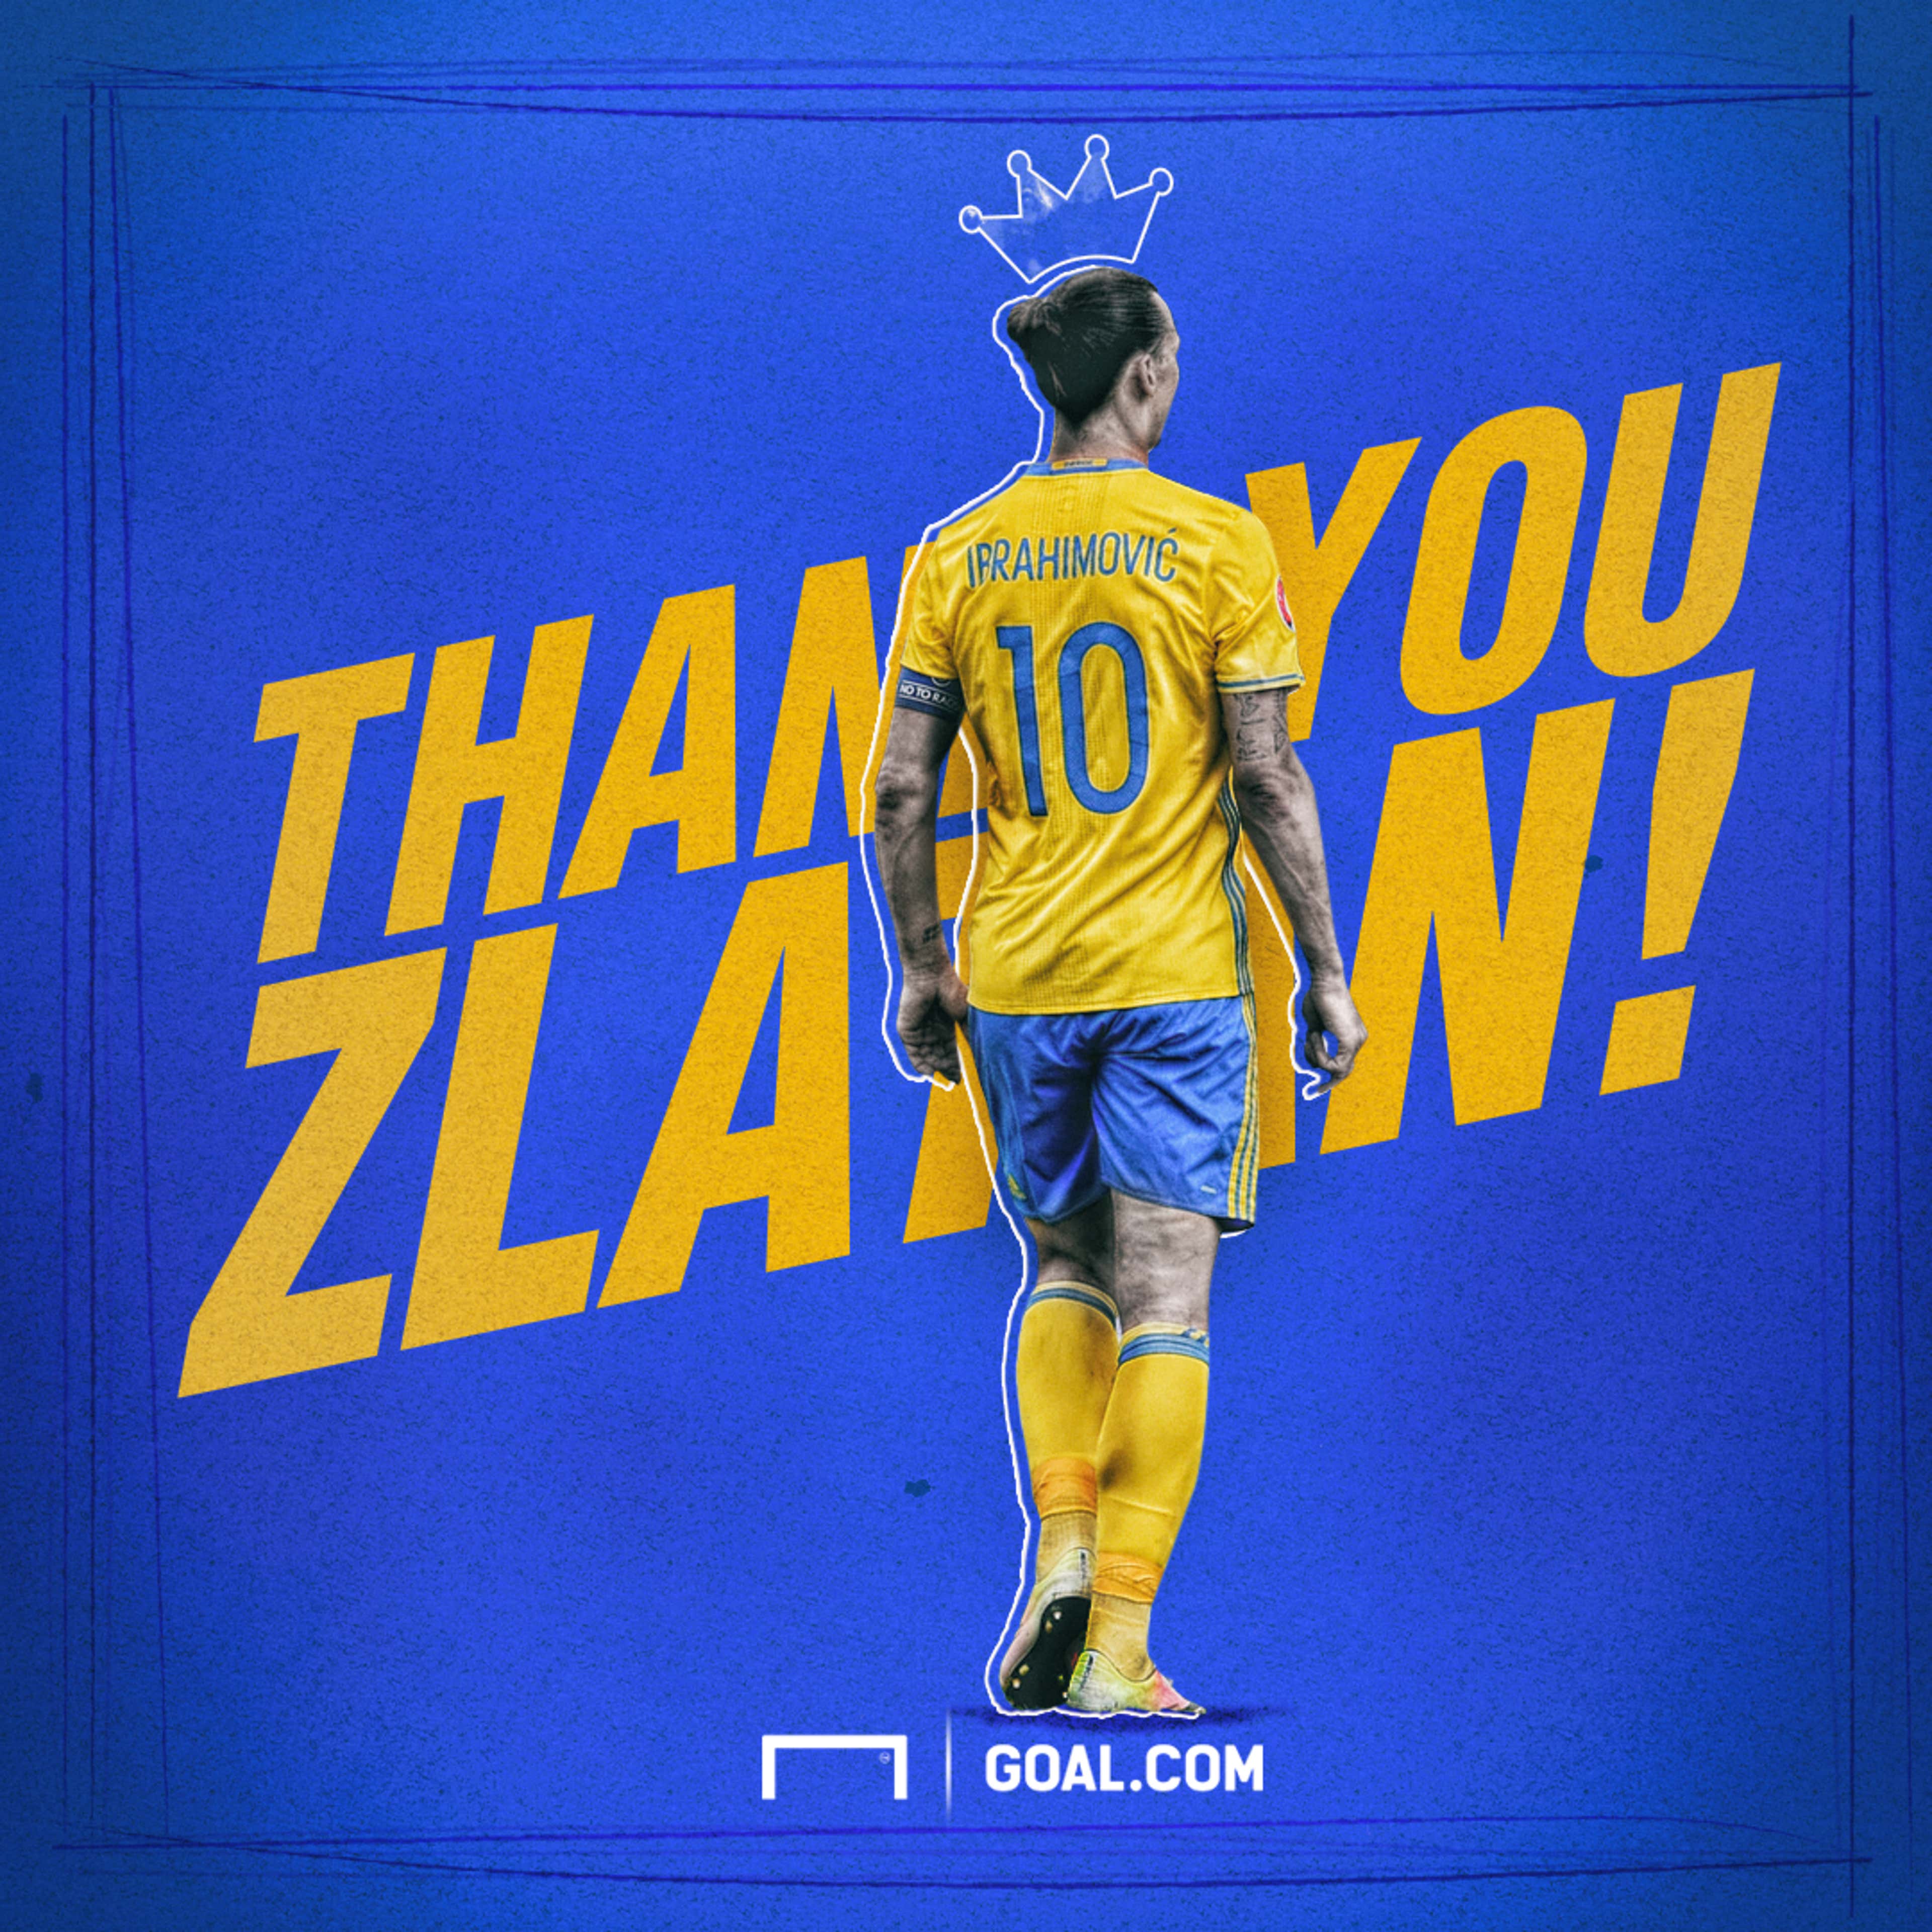 Thank you, Zlatan! GFX